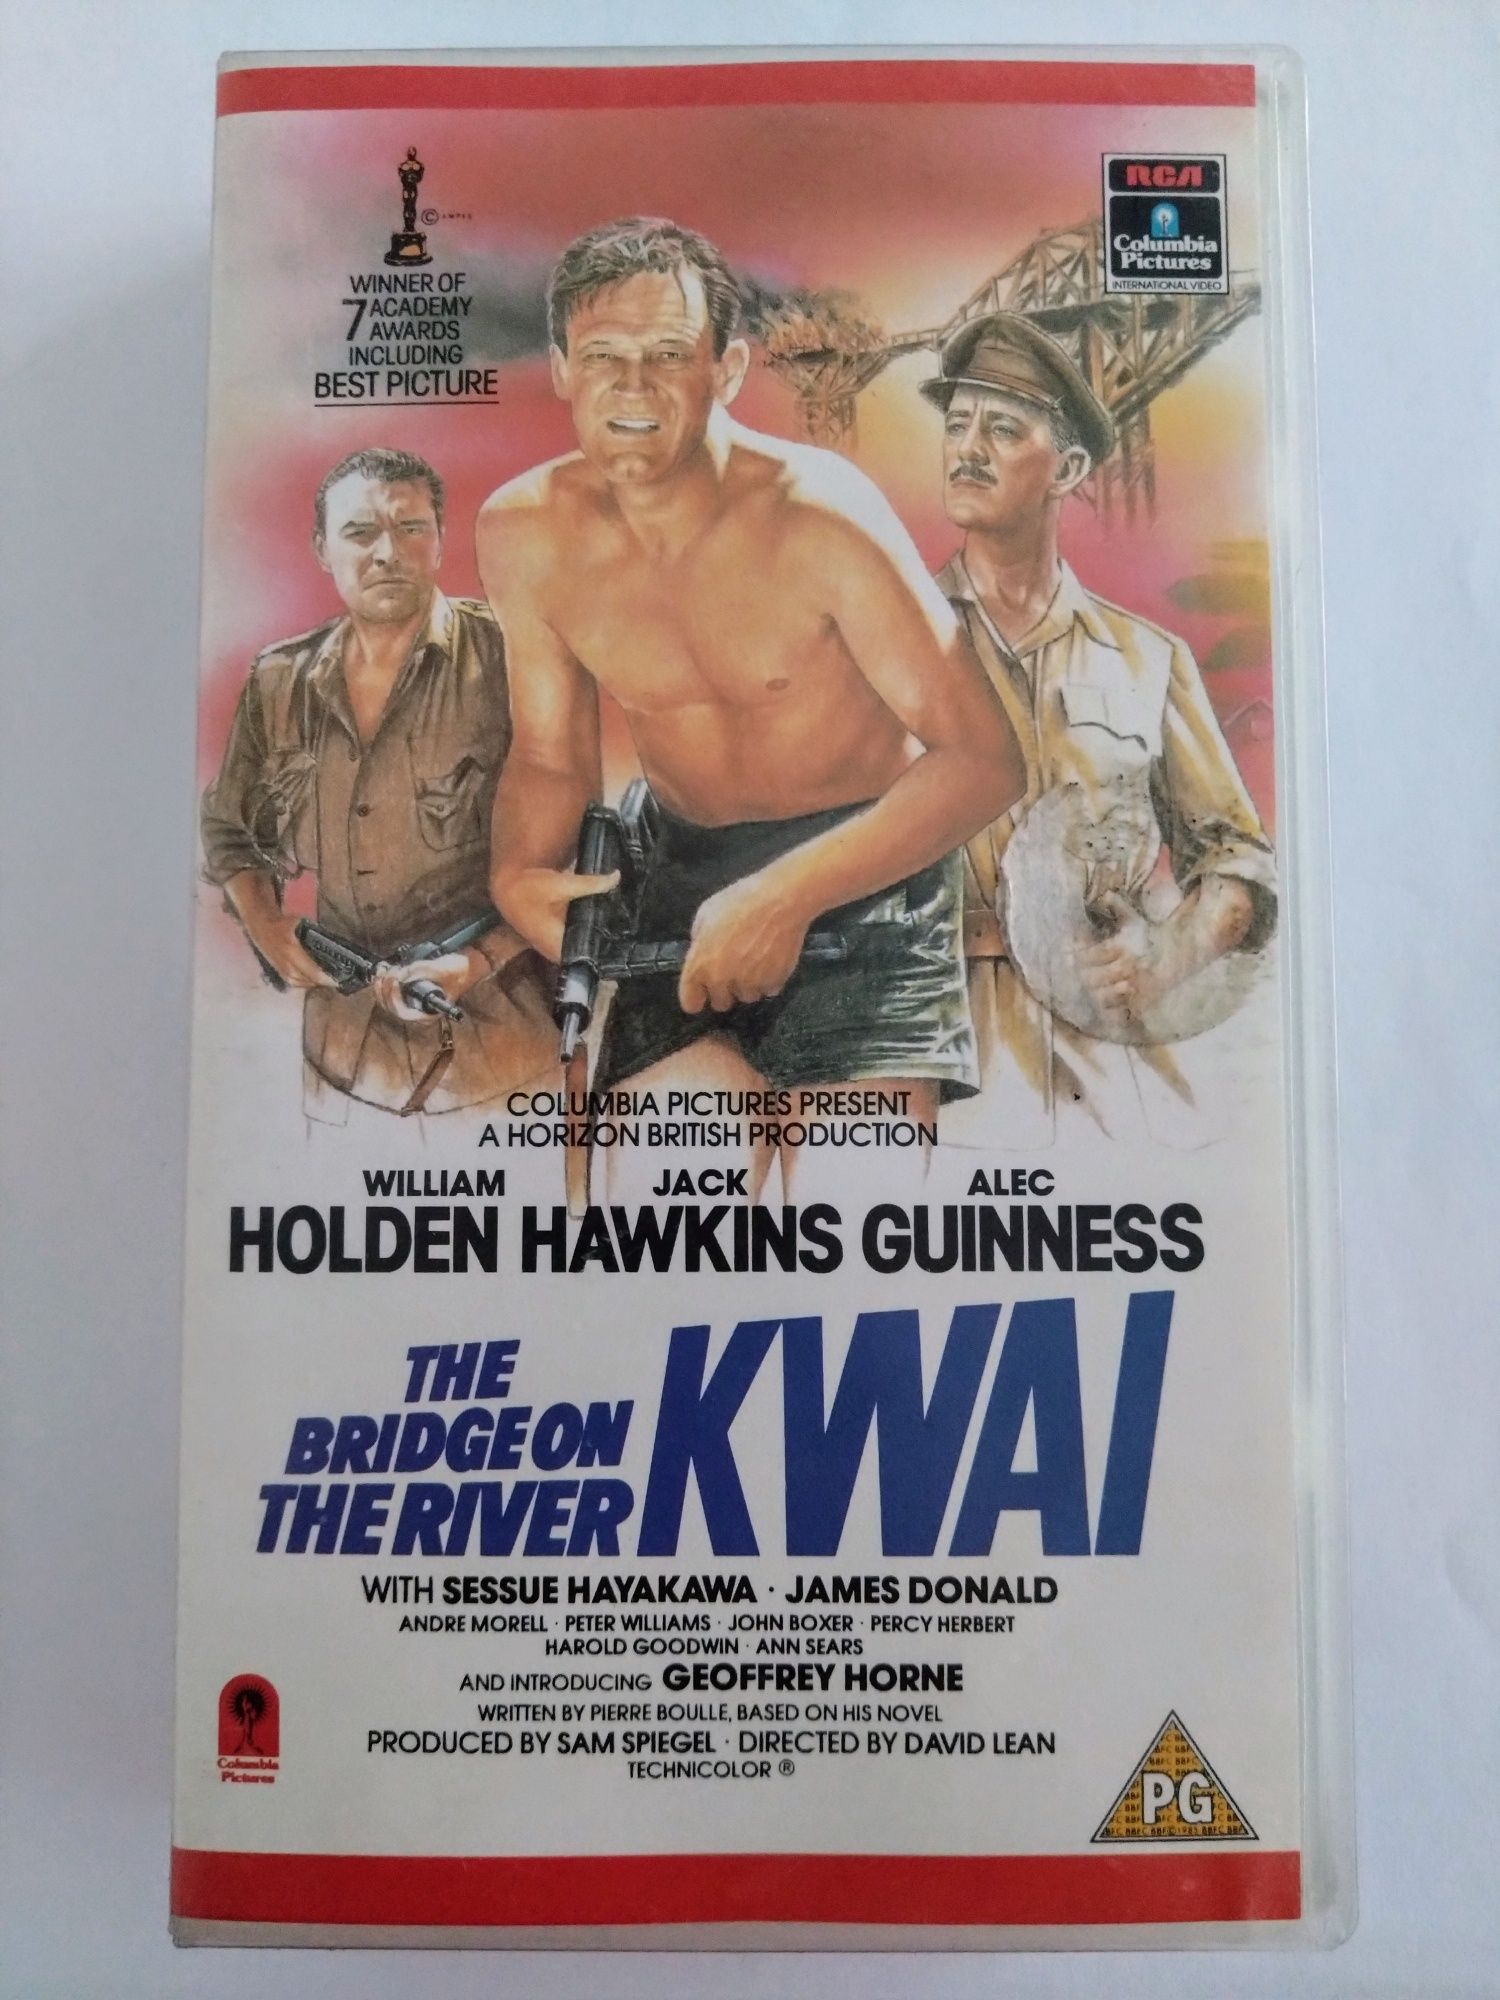 The Bridgeon the River Kwai VHS